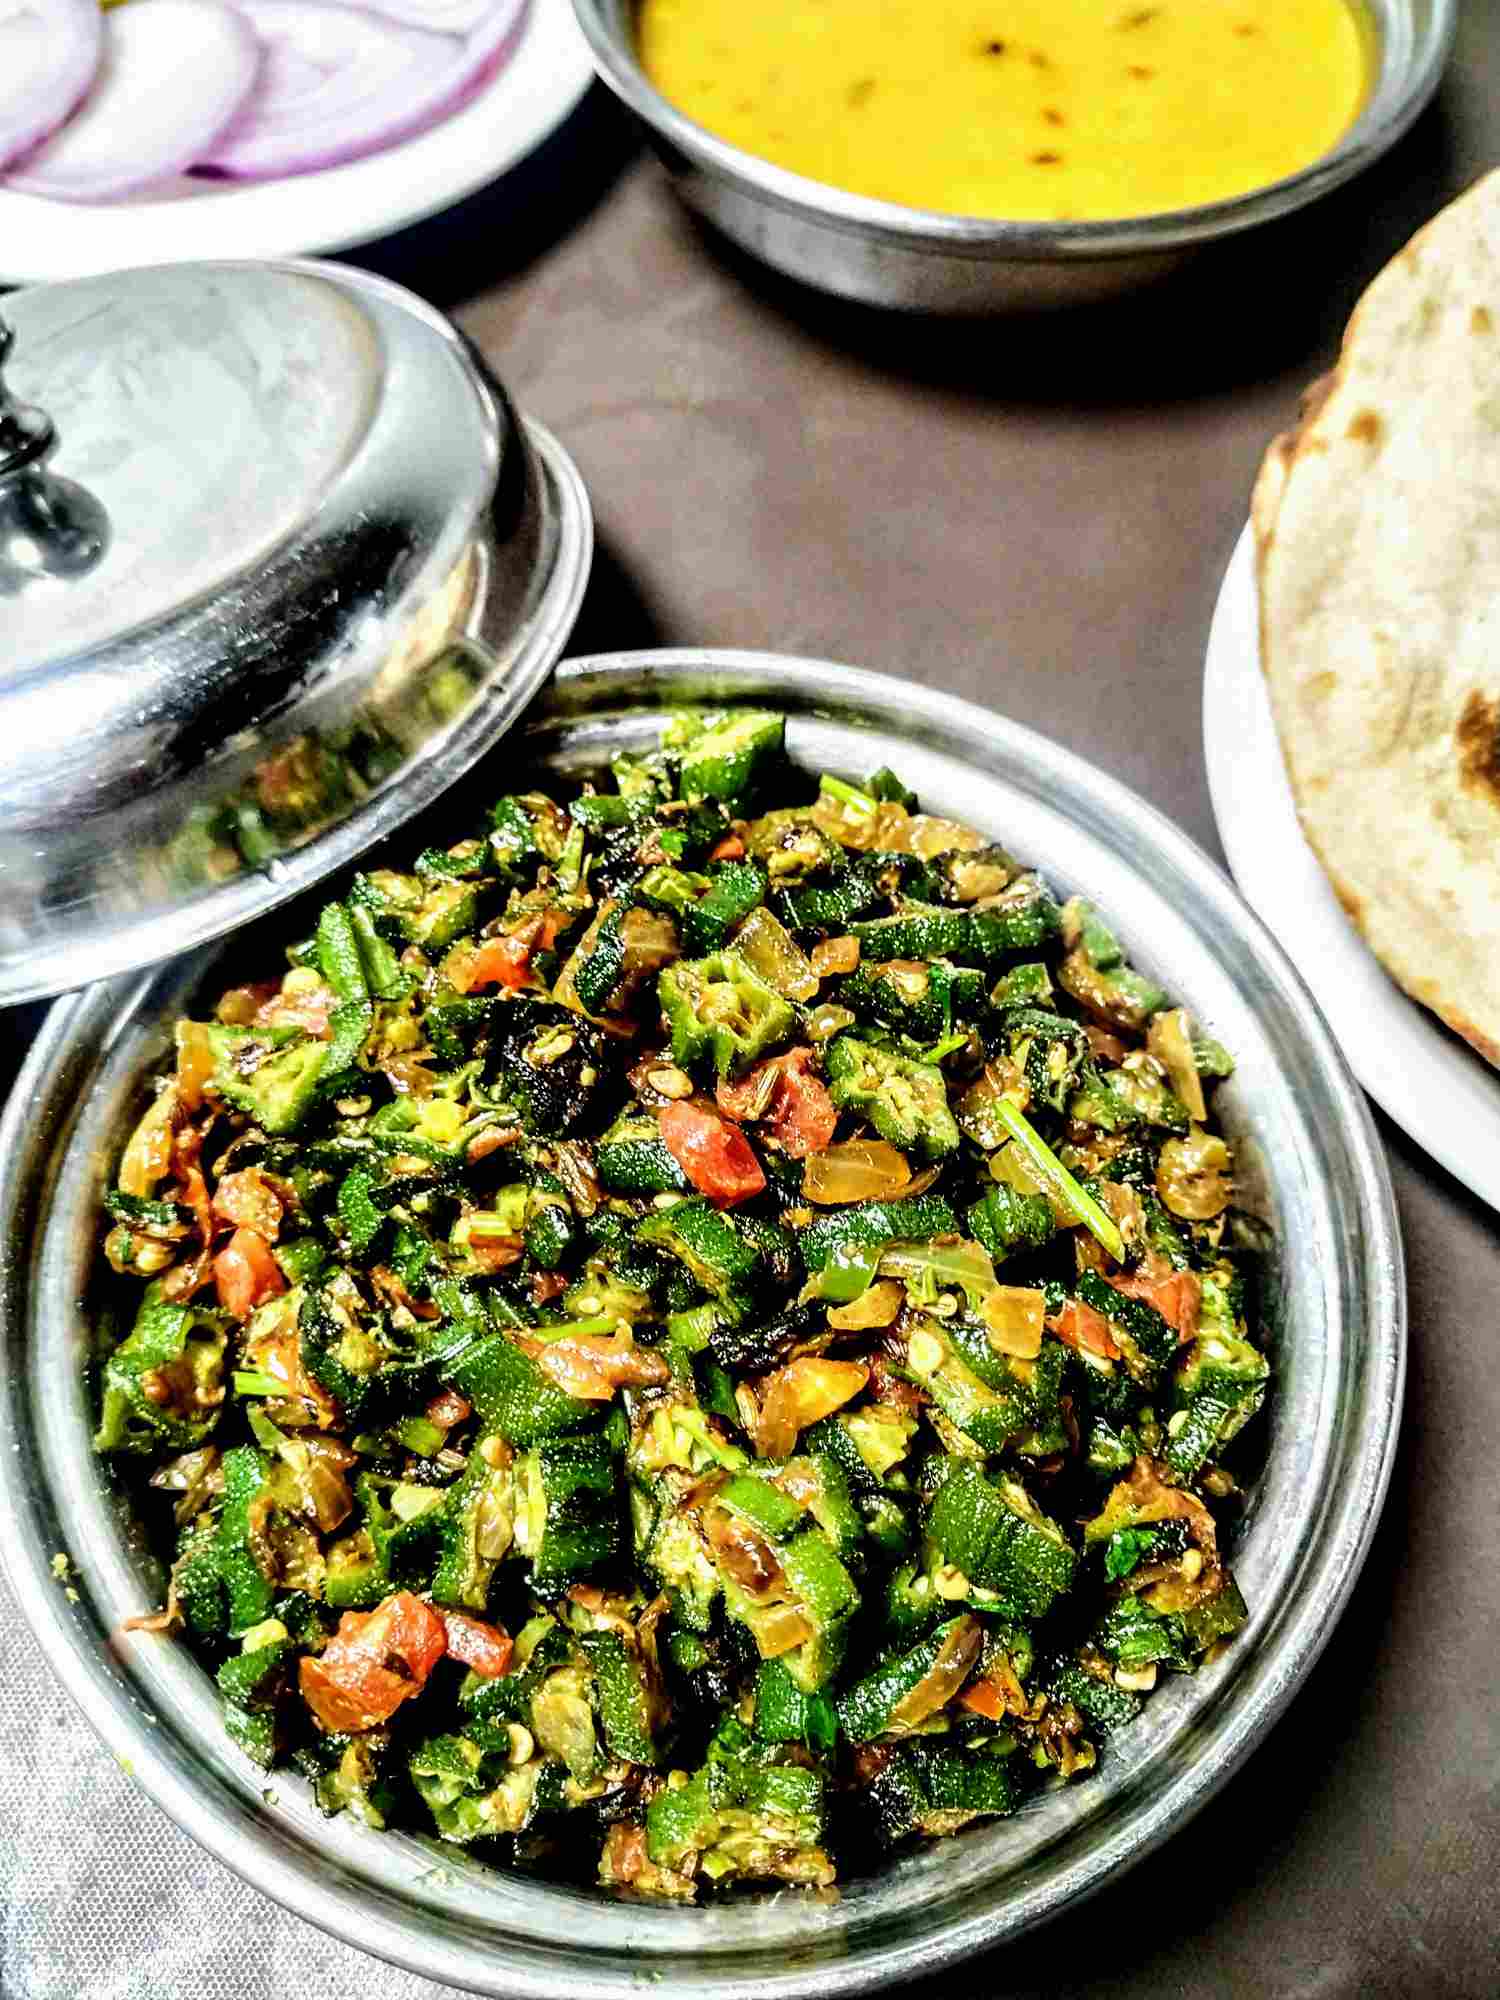 Bhindi ki sabji bhindi fry - hassanchef restaurant style recipes